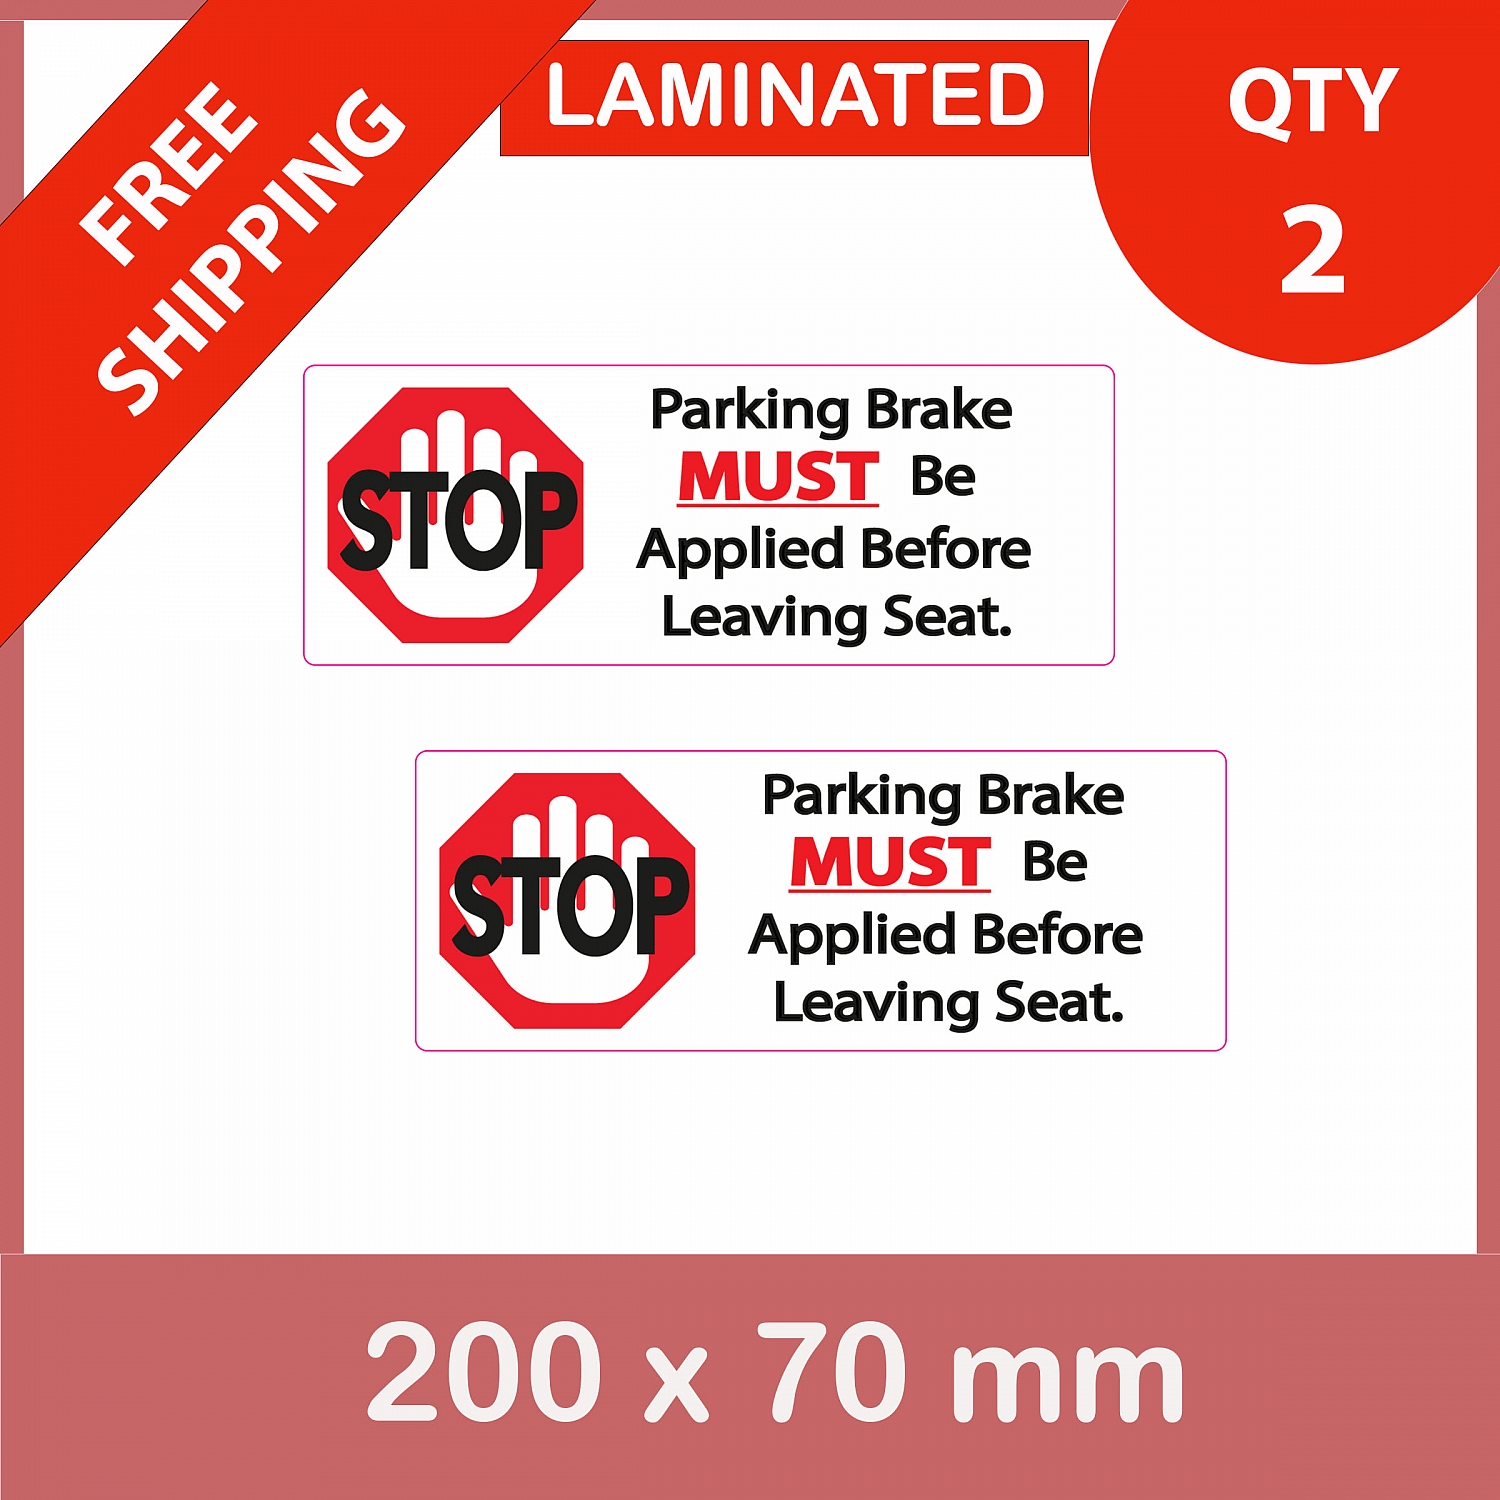 Stop parking brake, QTY 2, DECAL STICKER (LAMINATED) Die Cut for Car ,Ute, Caravan, 4x4 | Stop_parking_brake-web.jpg